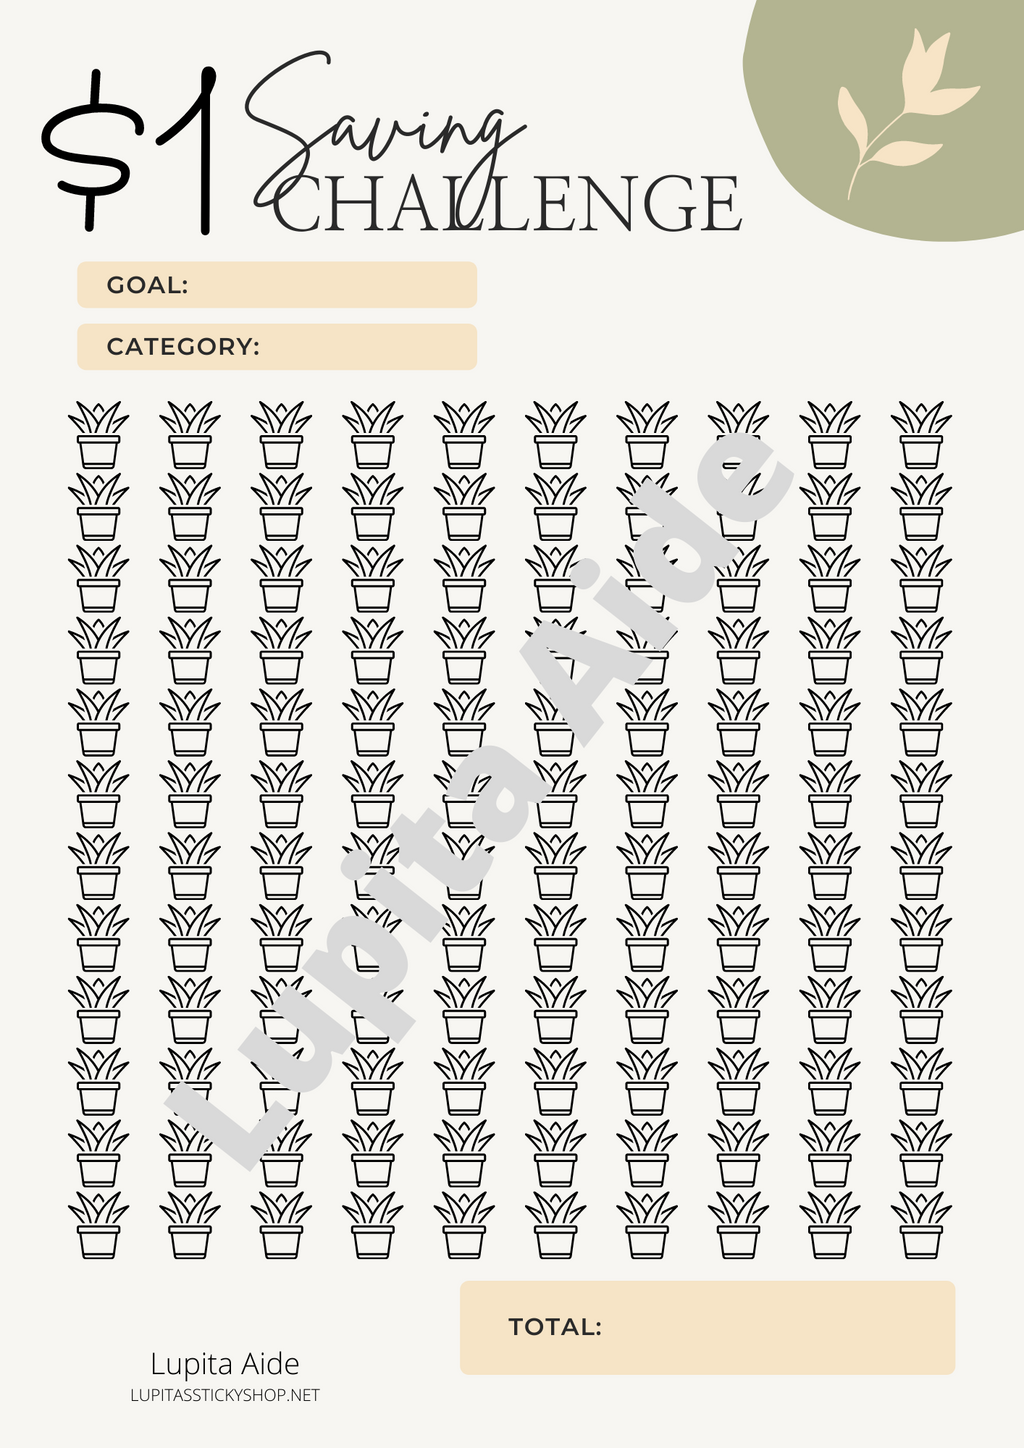 $1 Savings Challenge Succulents (printable)